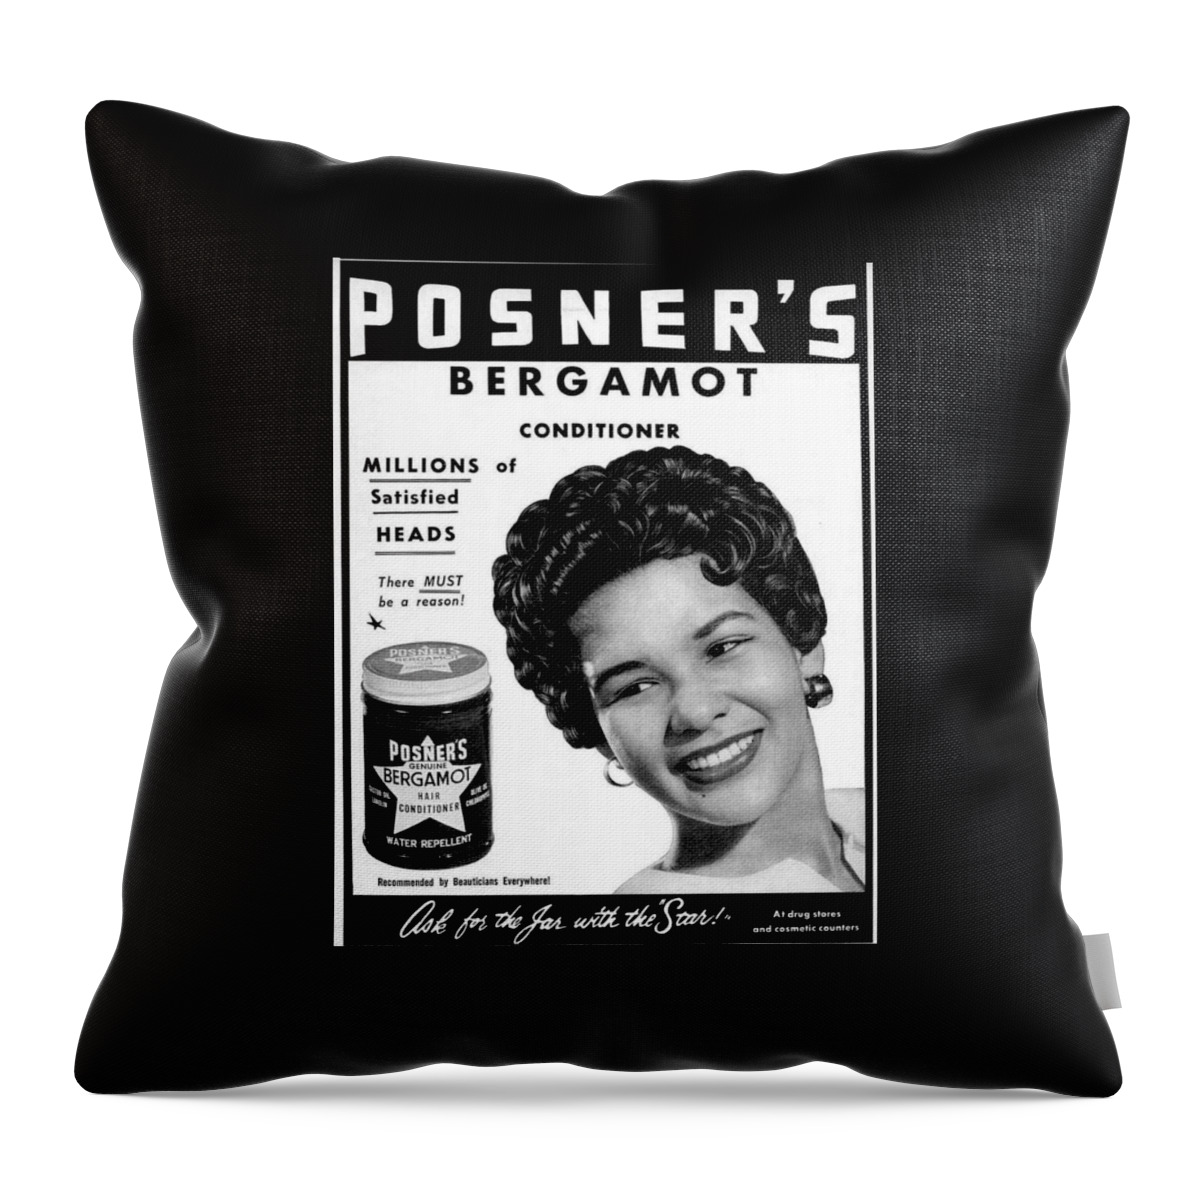 Black Americana Throw Pillow featuring the digital art Posner's Bergamont by Kim Kent